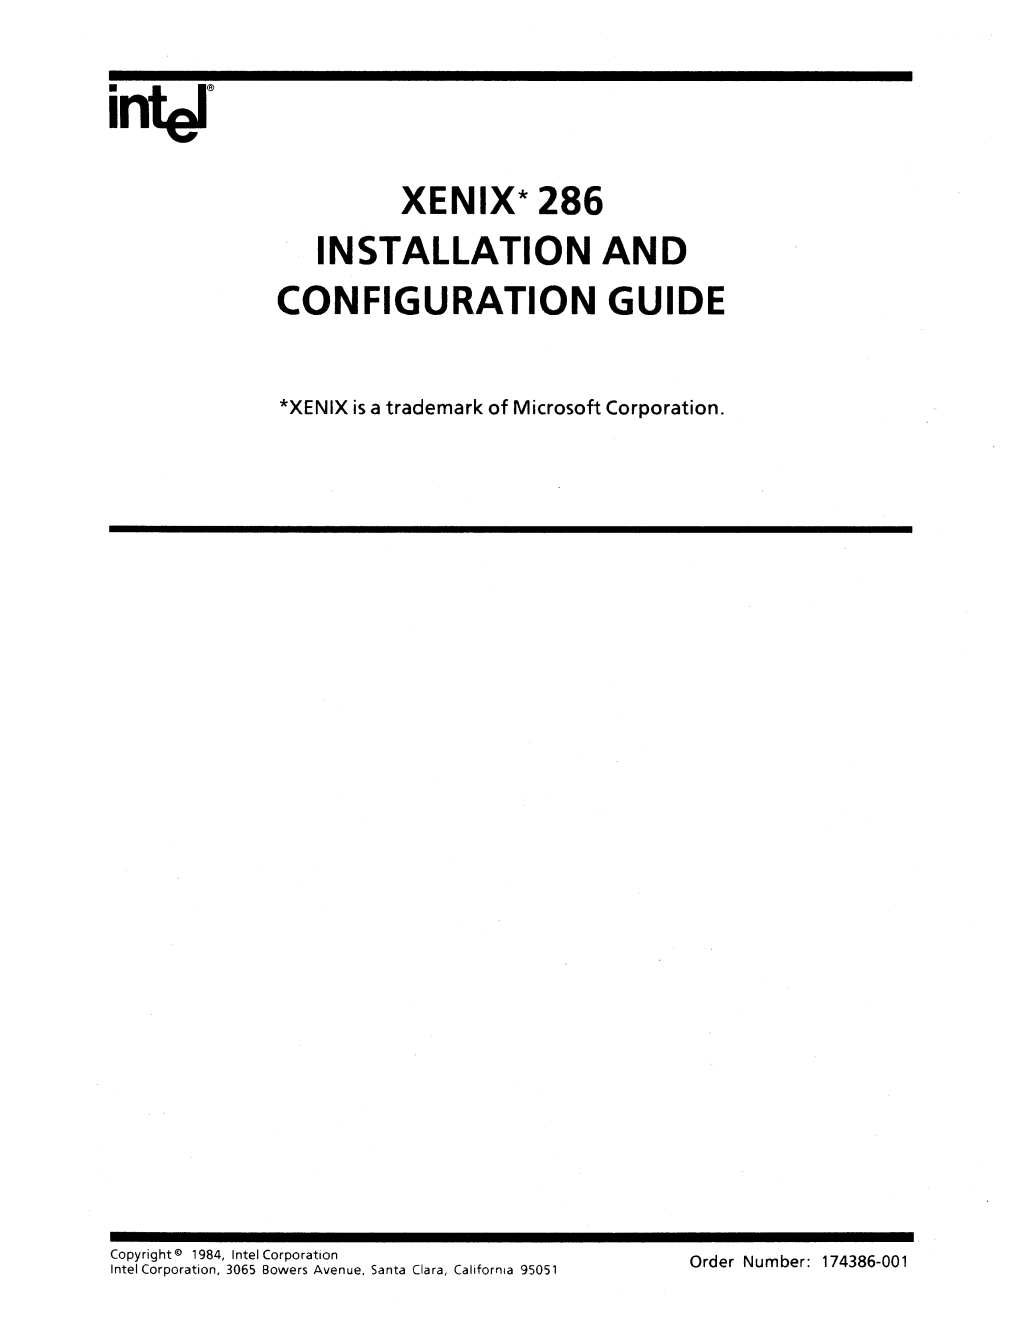 Xenix* 286 Installation and Configuration Guide